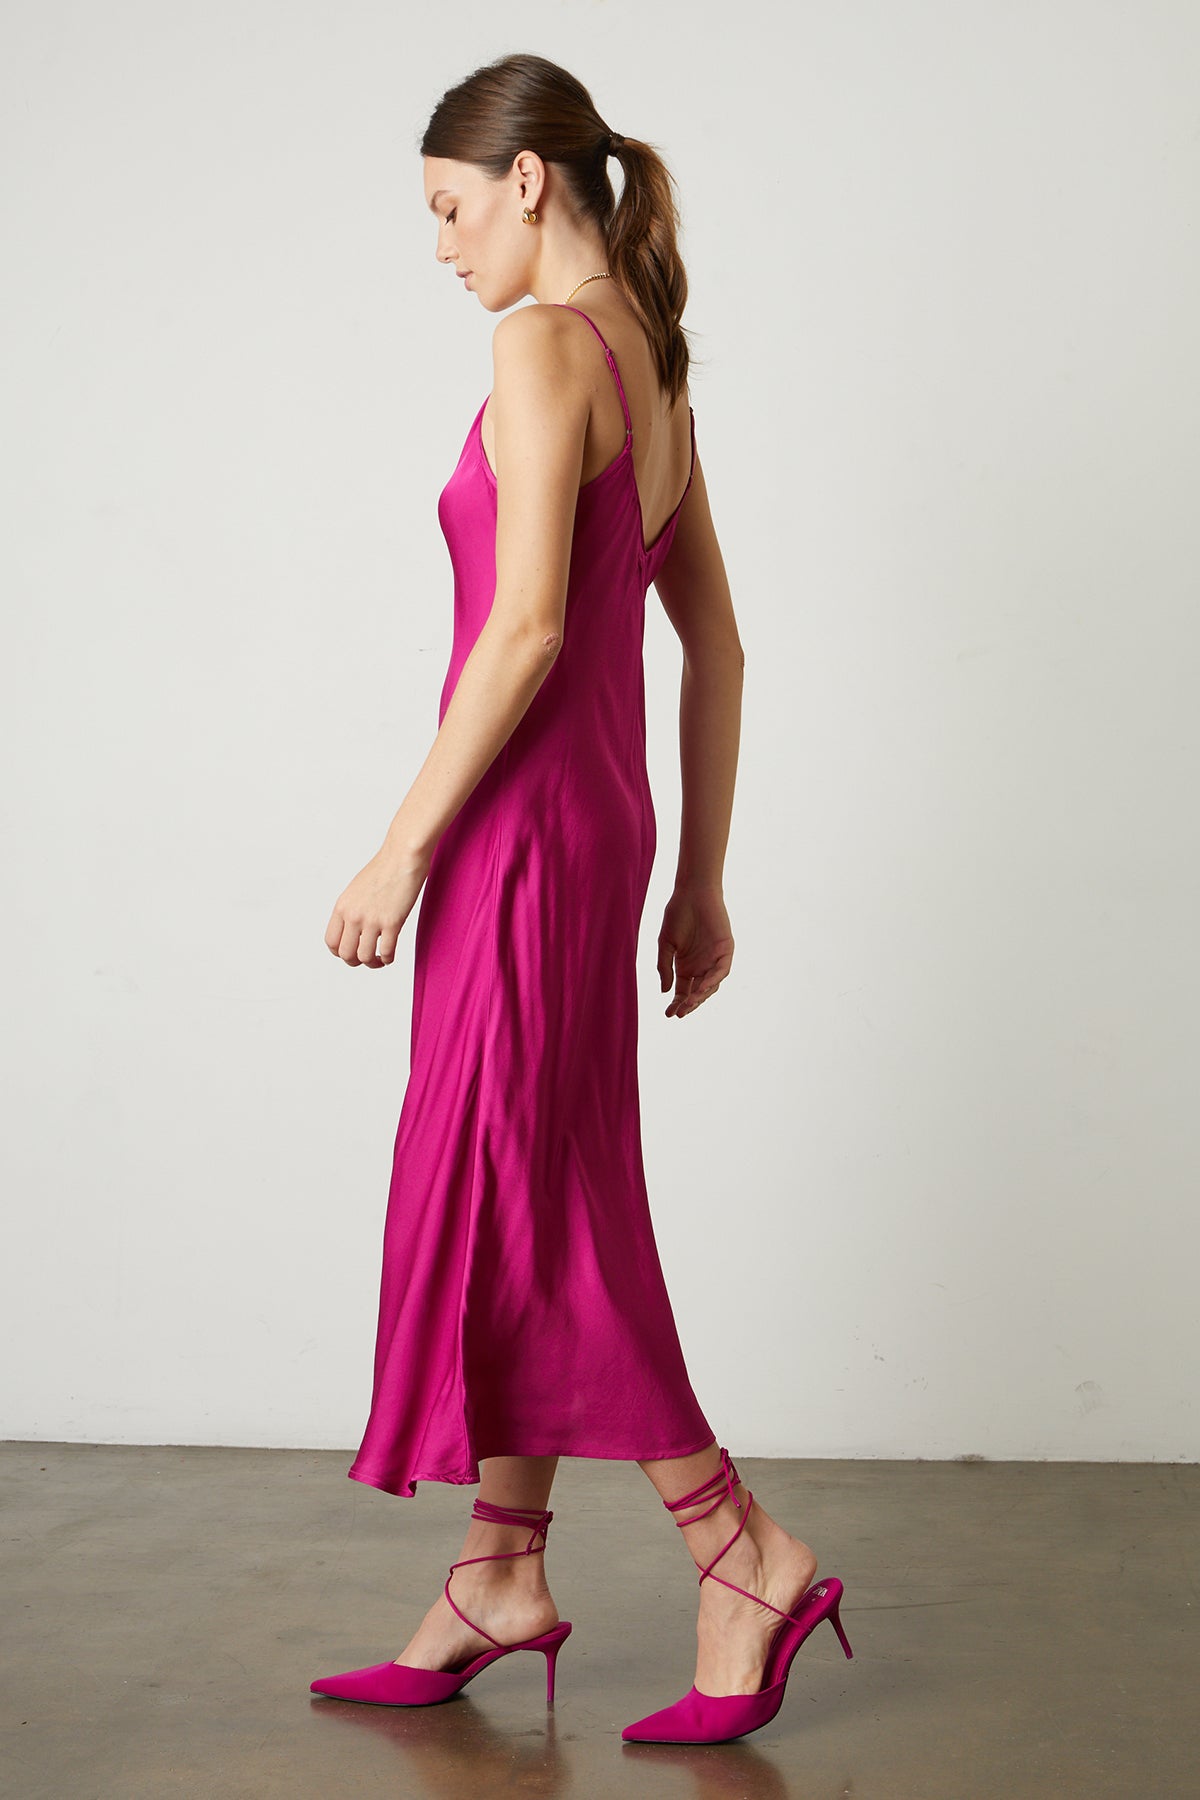   Poppy Satin Slip Dress in bright raspberry pink with matching heels side 